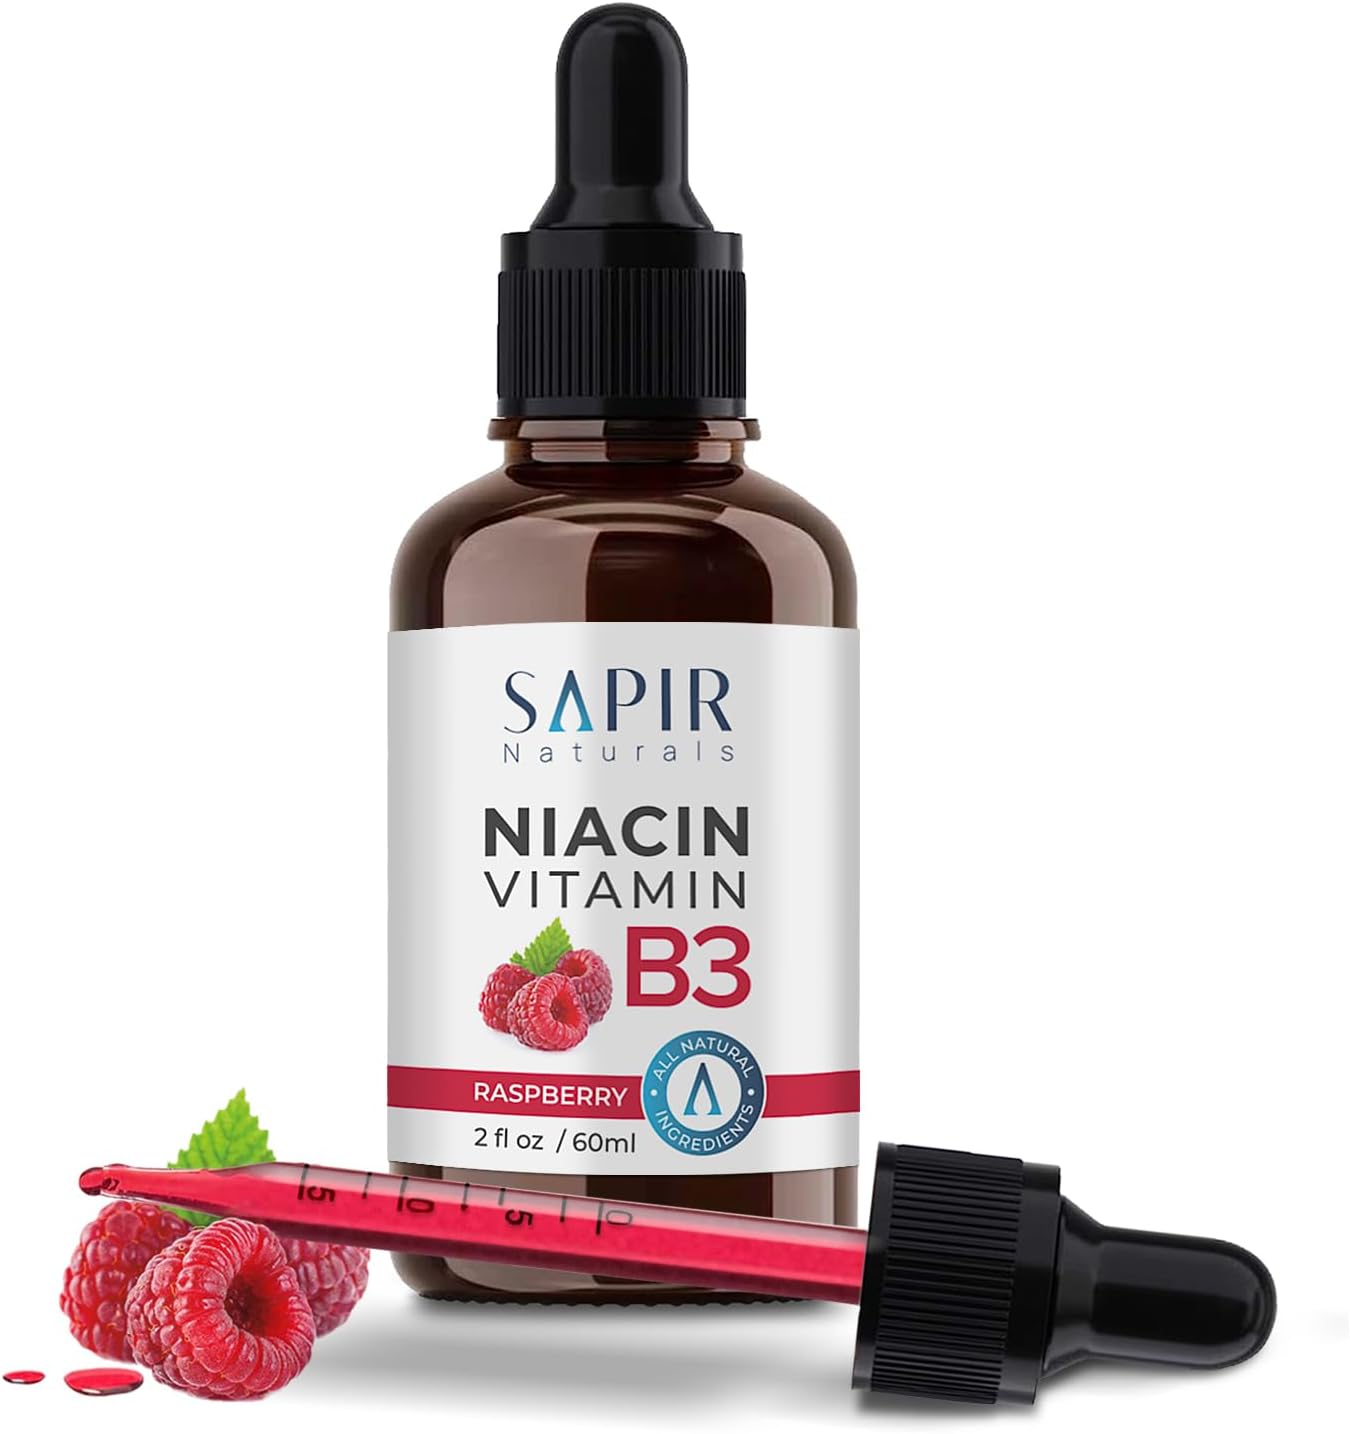 Sapir Naturals Vitamin B3 Liquid Drops 2 oz - Niacin B3 Supplement - Raspberry Flavor - Made in USA